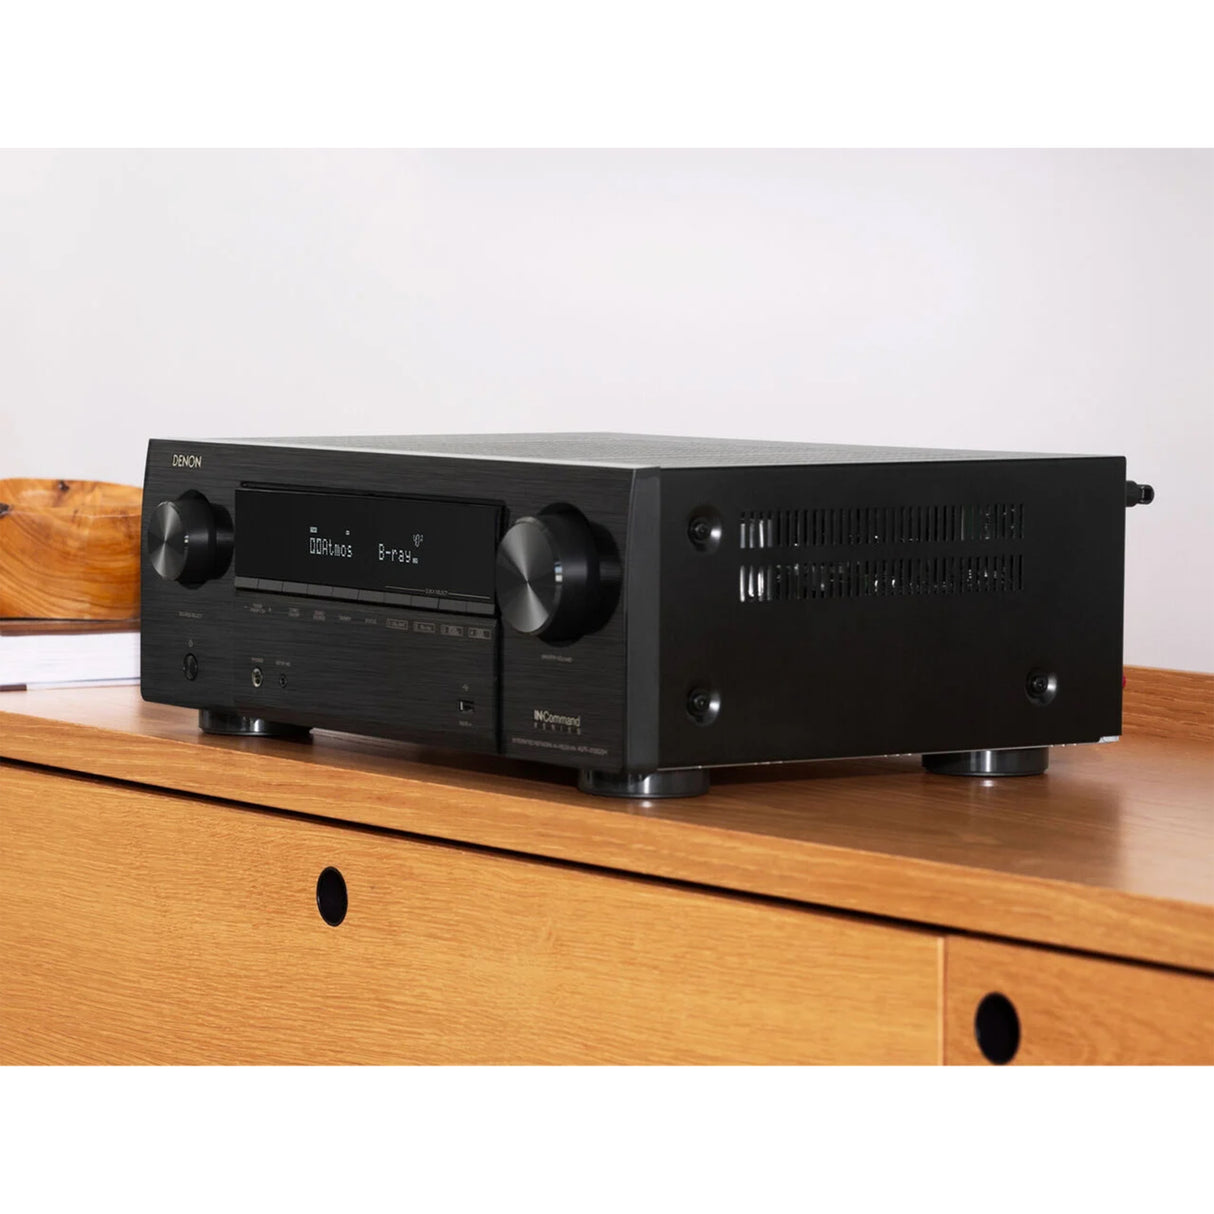 Denon AVR-X1800H - 7.2 Channel 8K AV receiver with Dolby Atmos